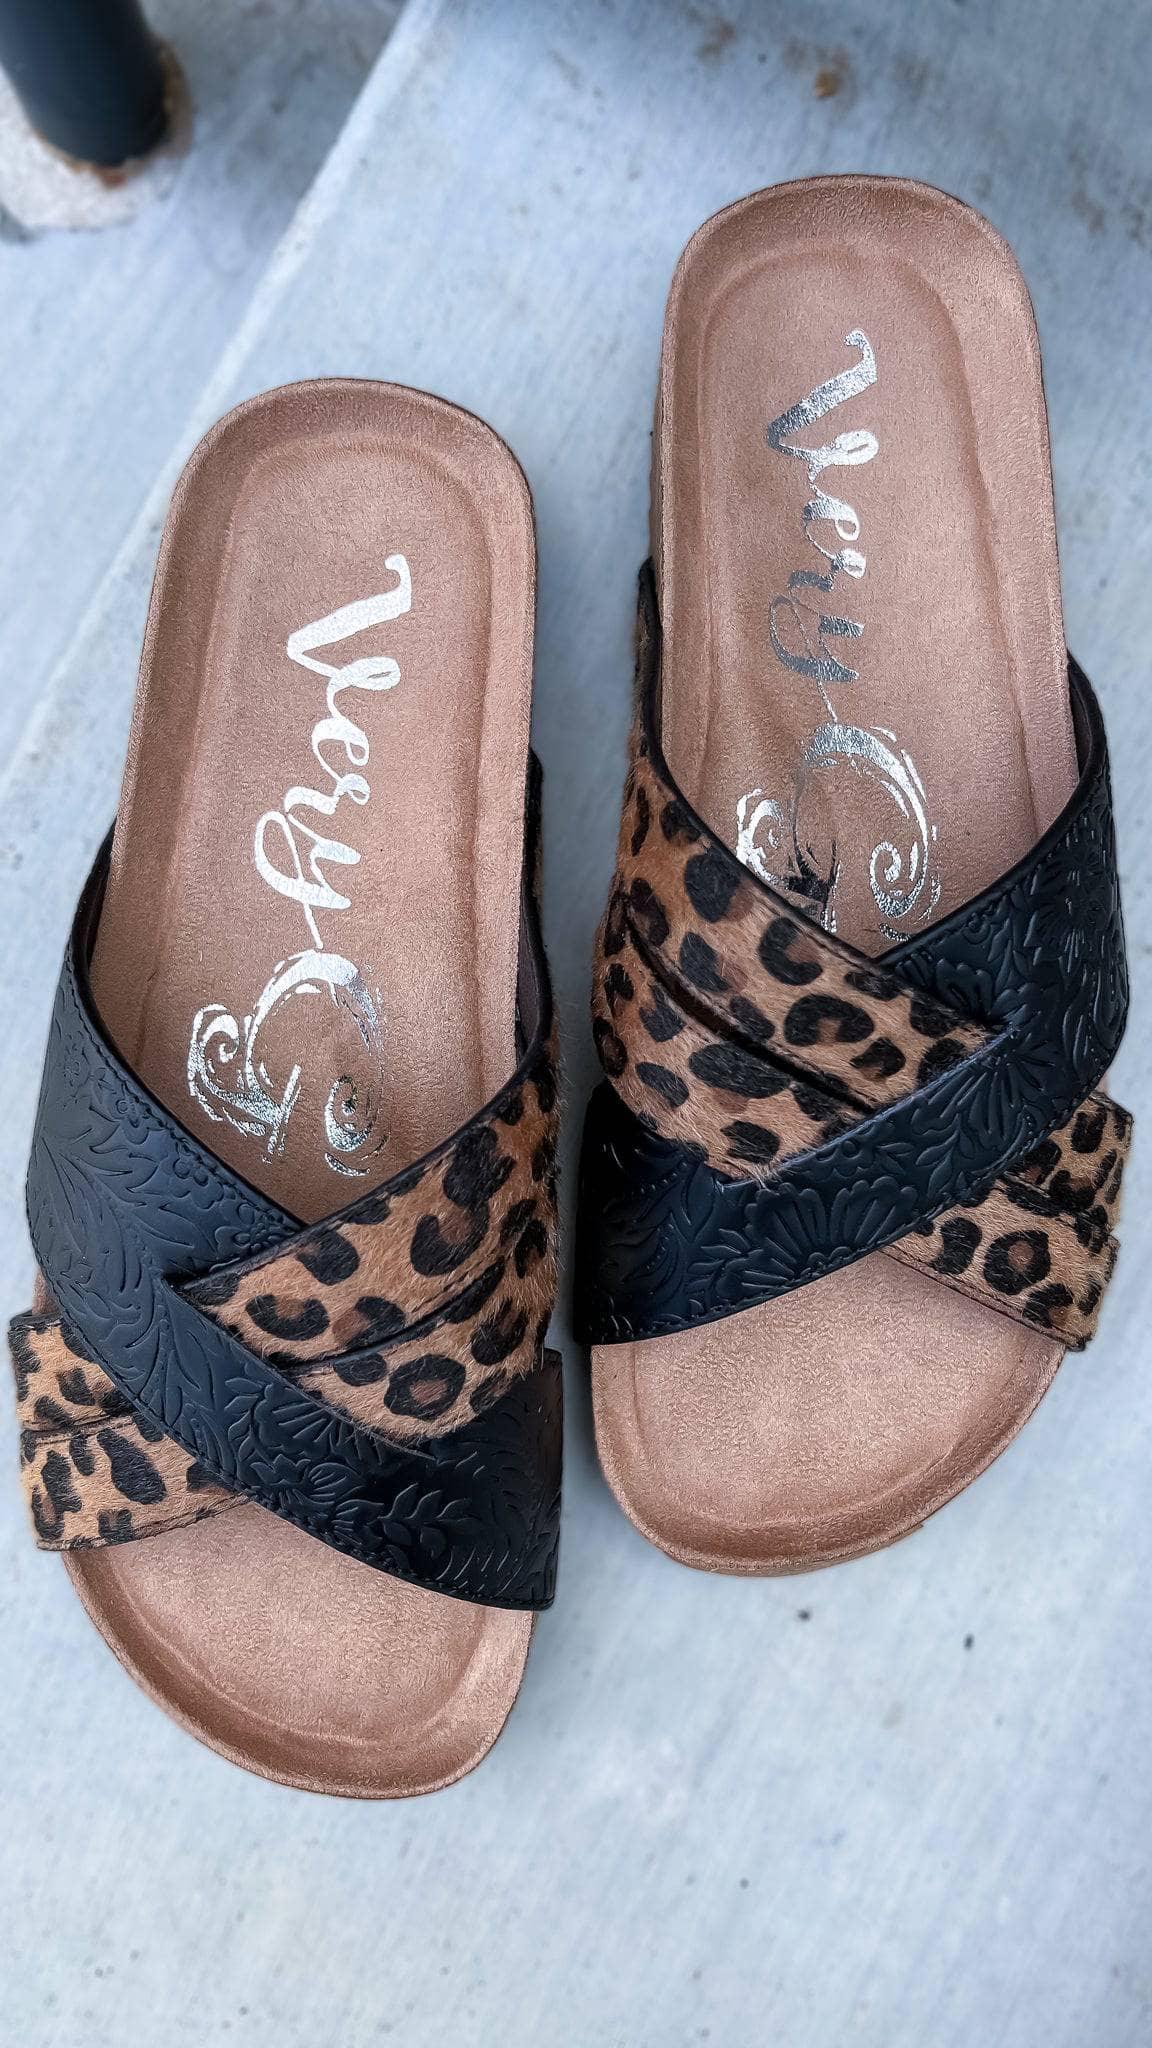 Leopard Ari Sandals - The ZigZag Stripe